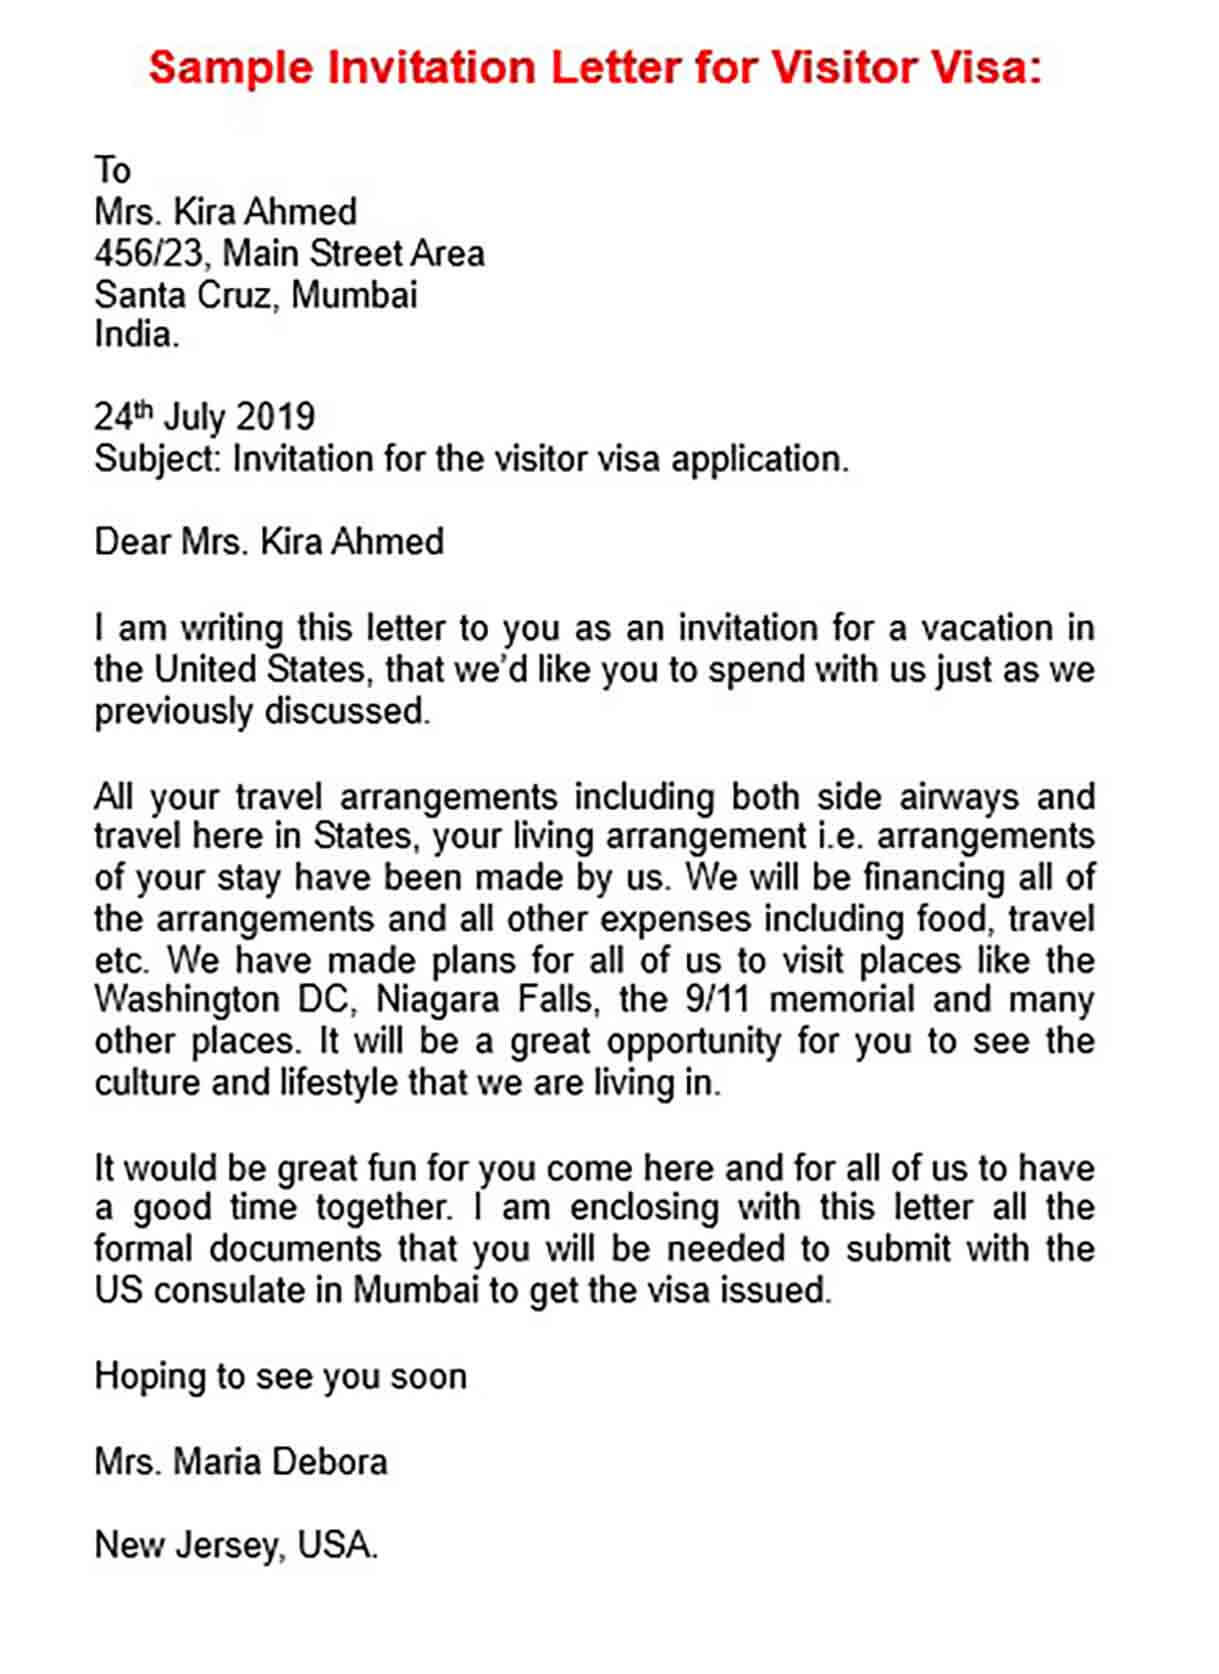 Invitation Letter For Tourist Visa Family Ireland - How to Write